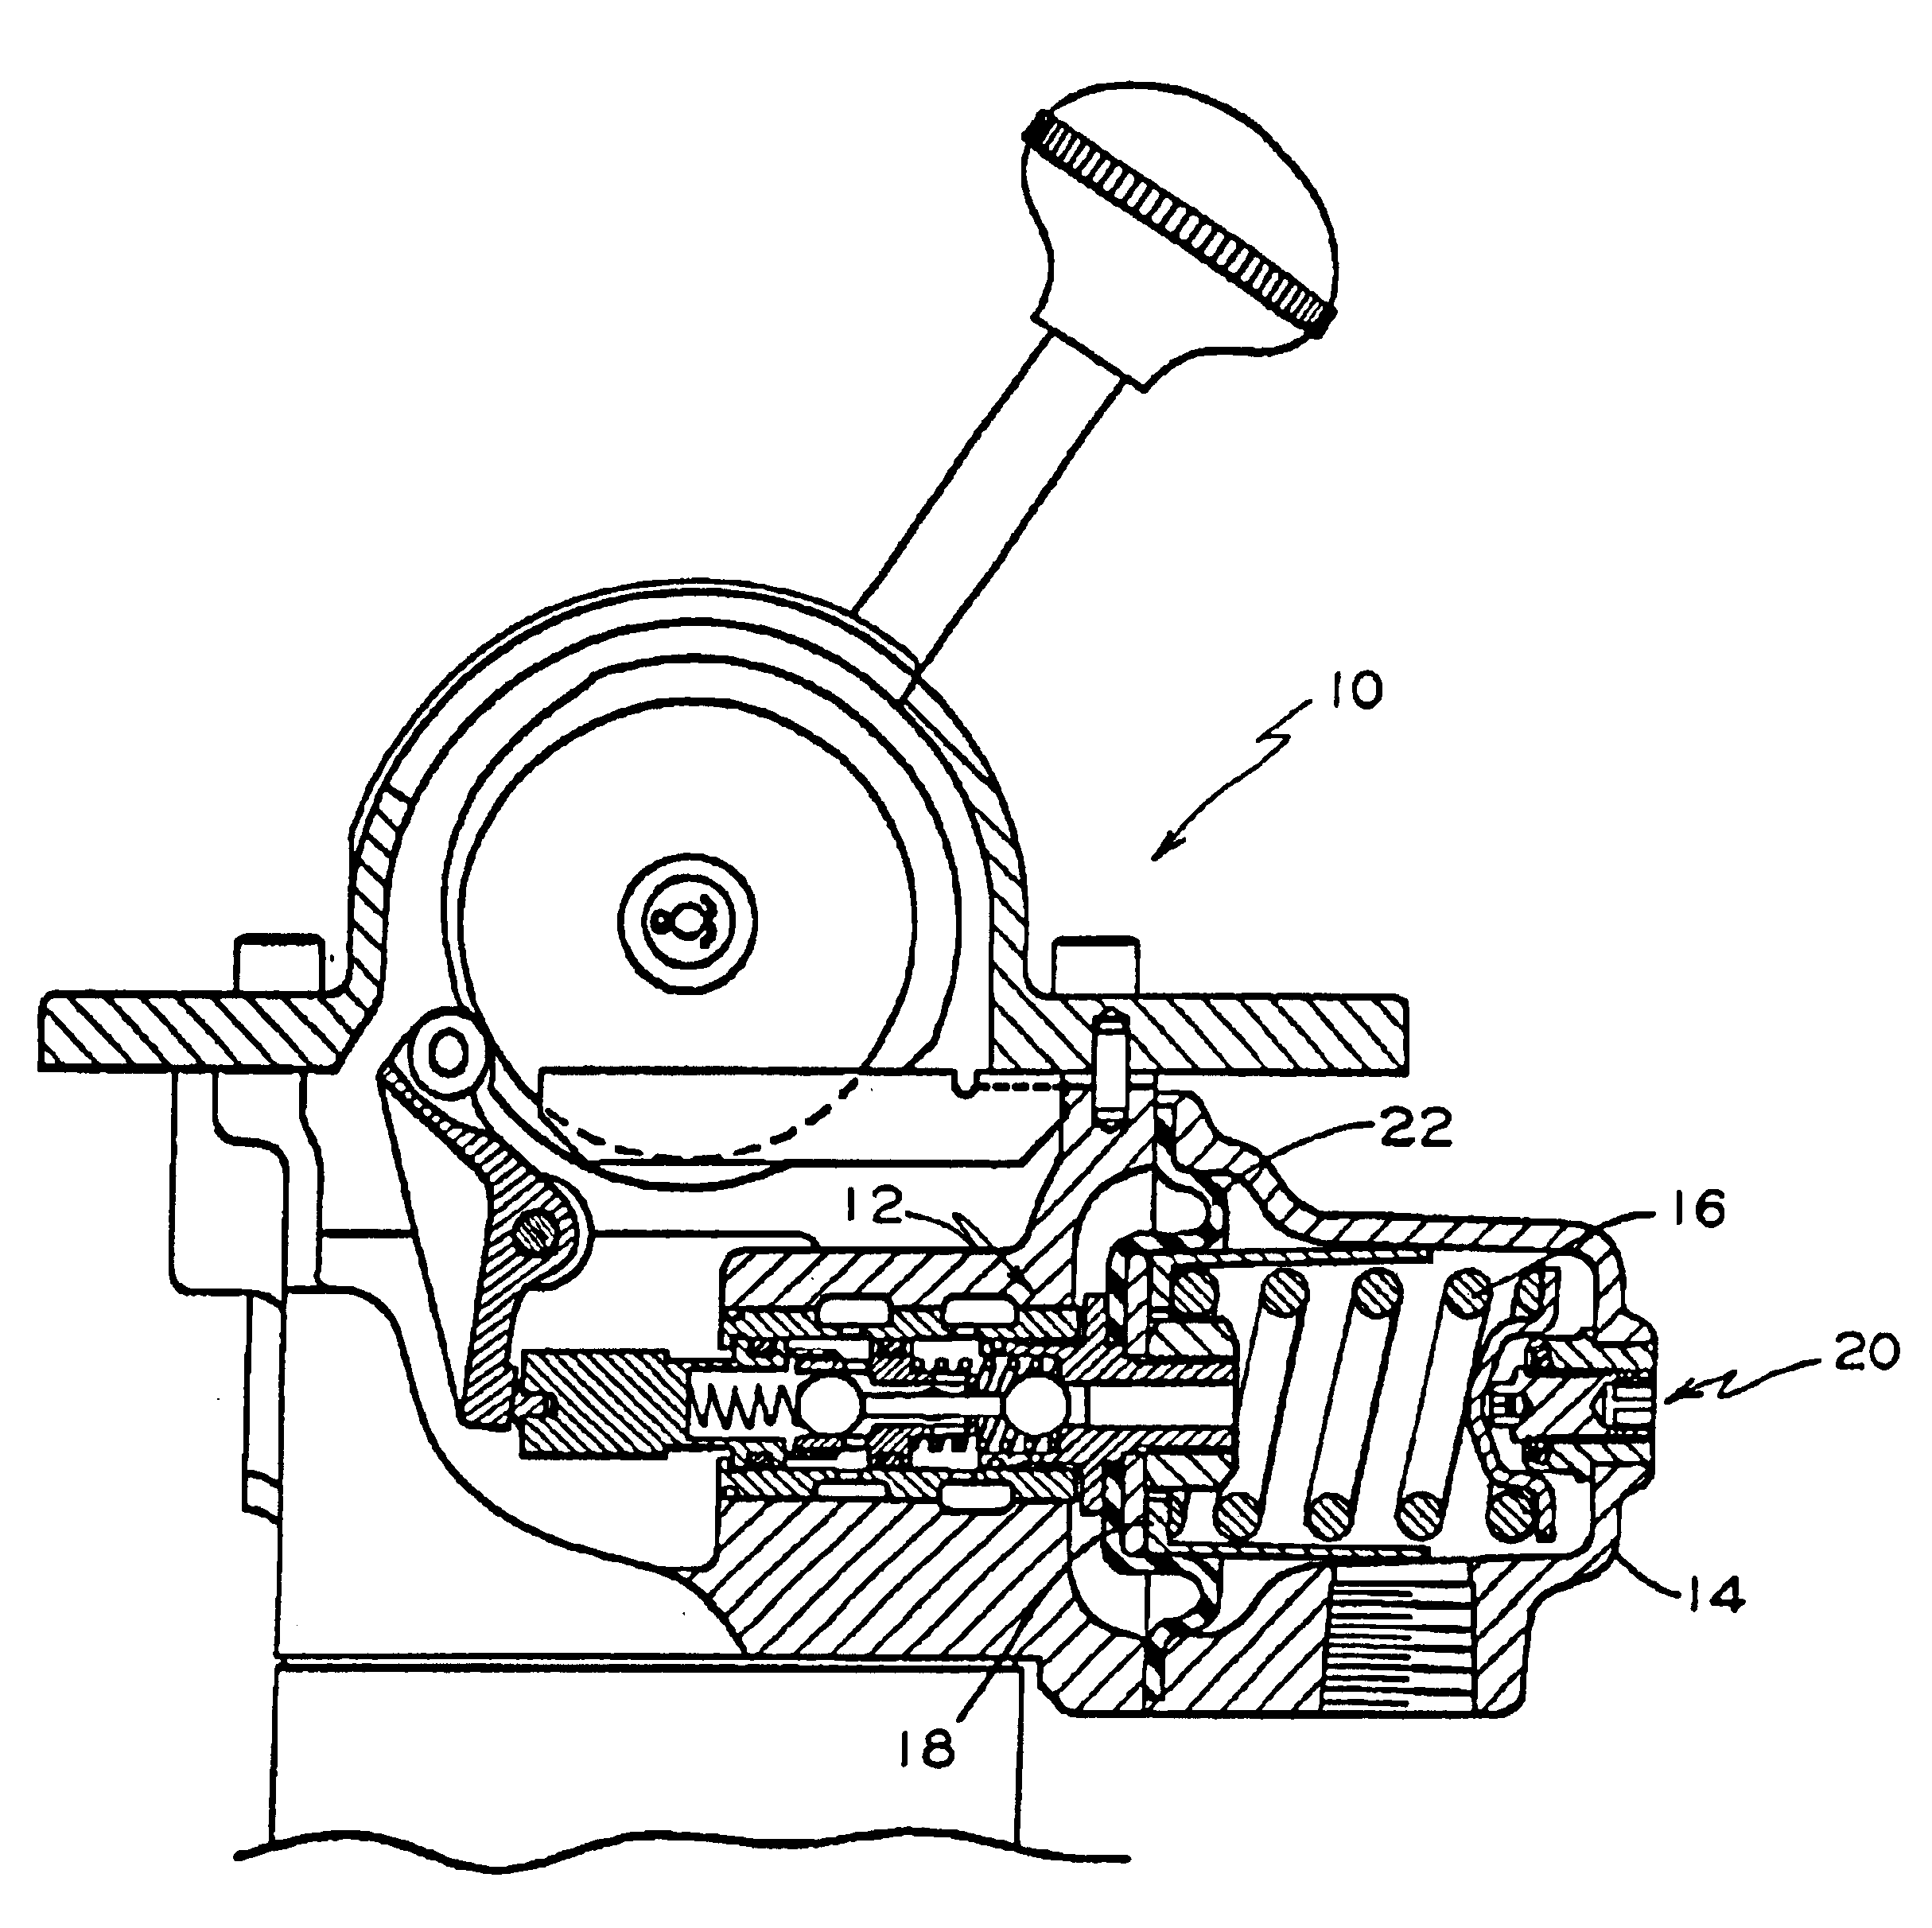 Locomotive brake valve equipped with a range spring dampener